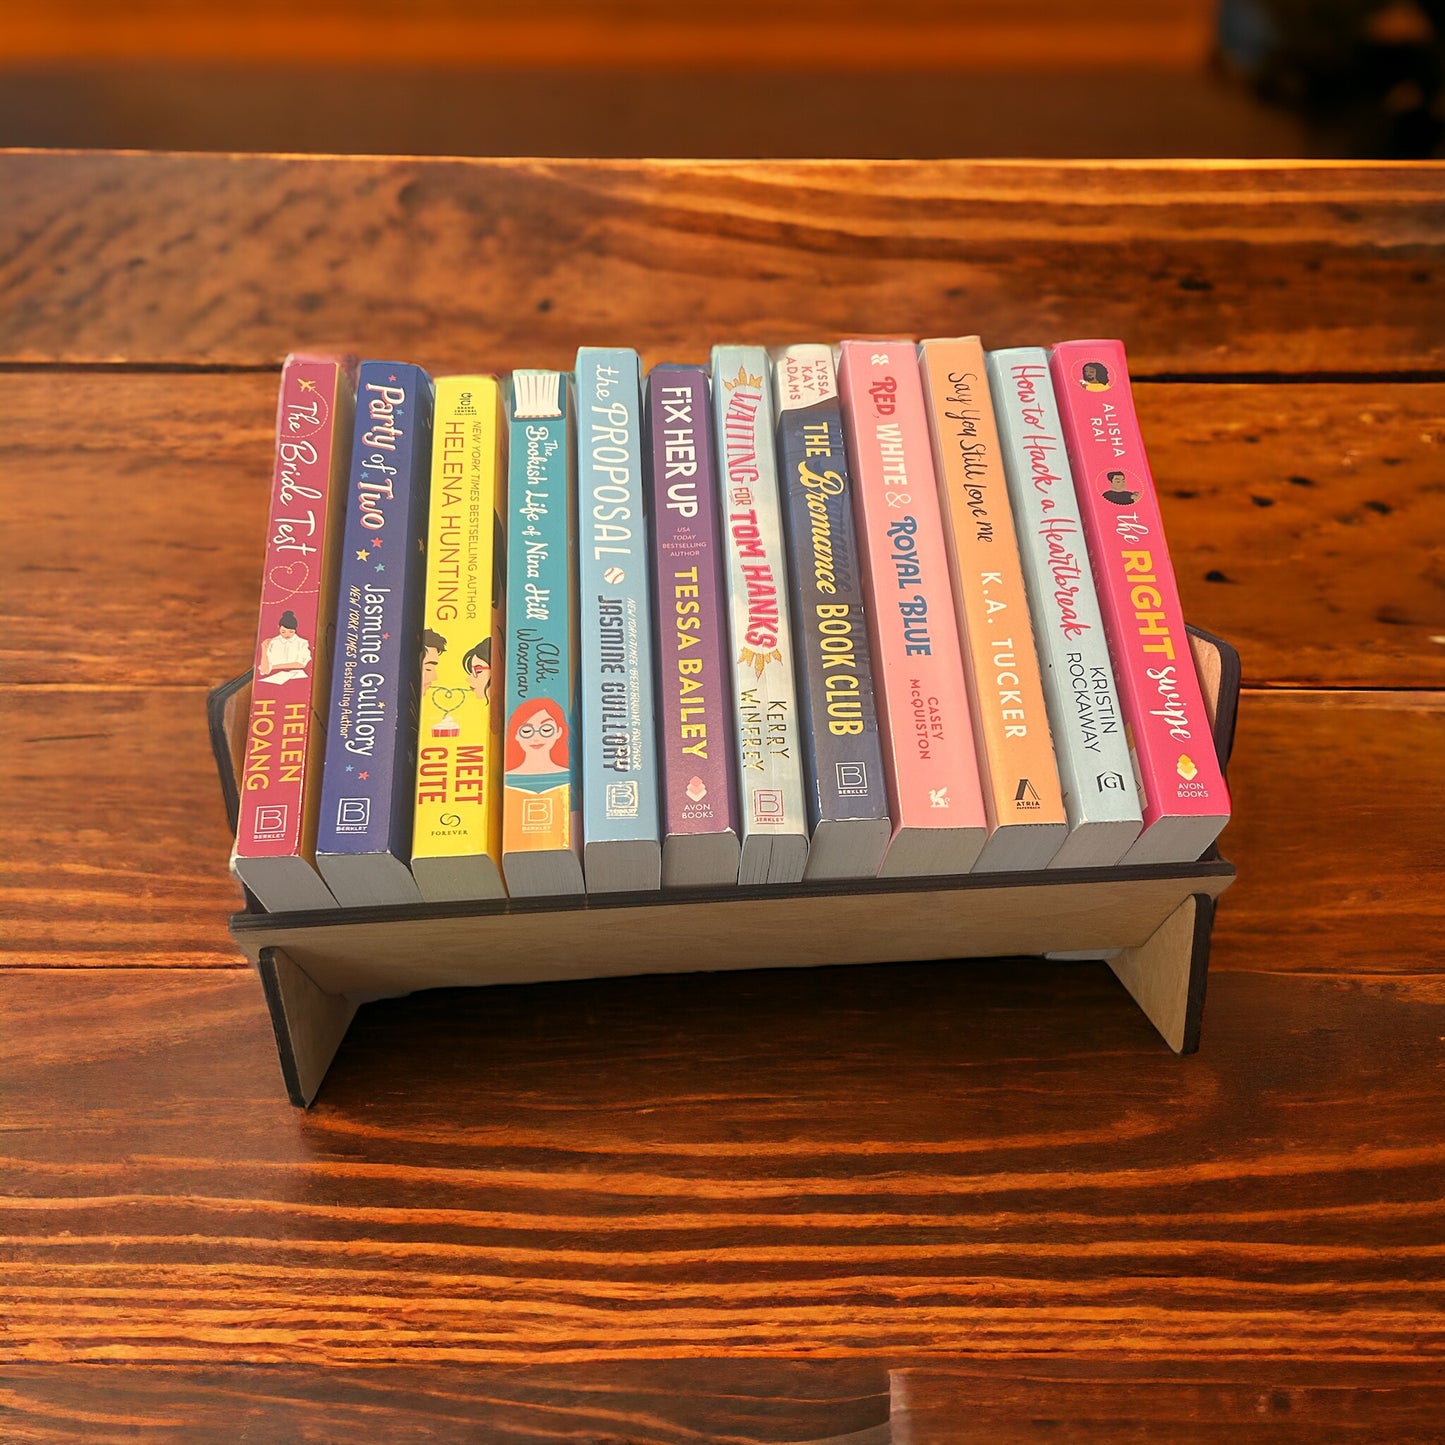 Handmade TBR Tabletop Bookshelf - Proud Romance Book Club Member Engraved Design